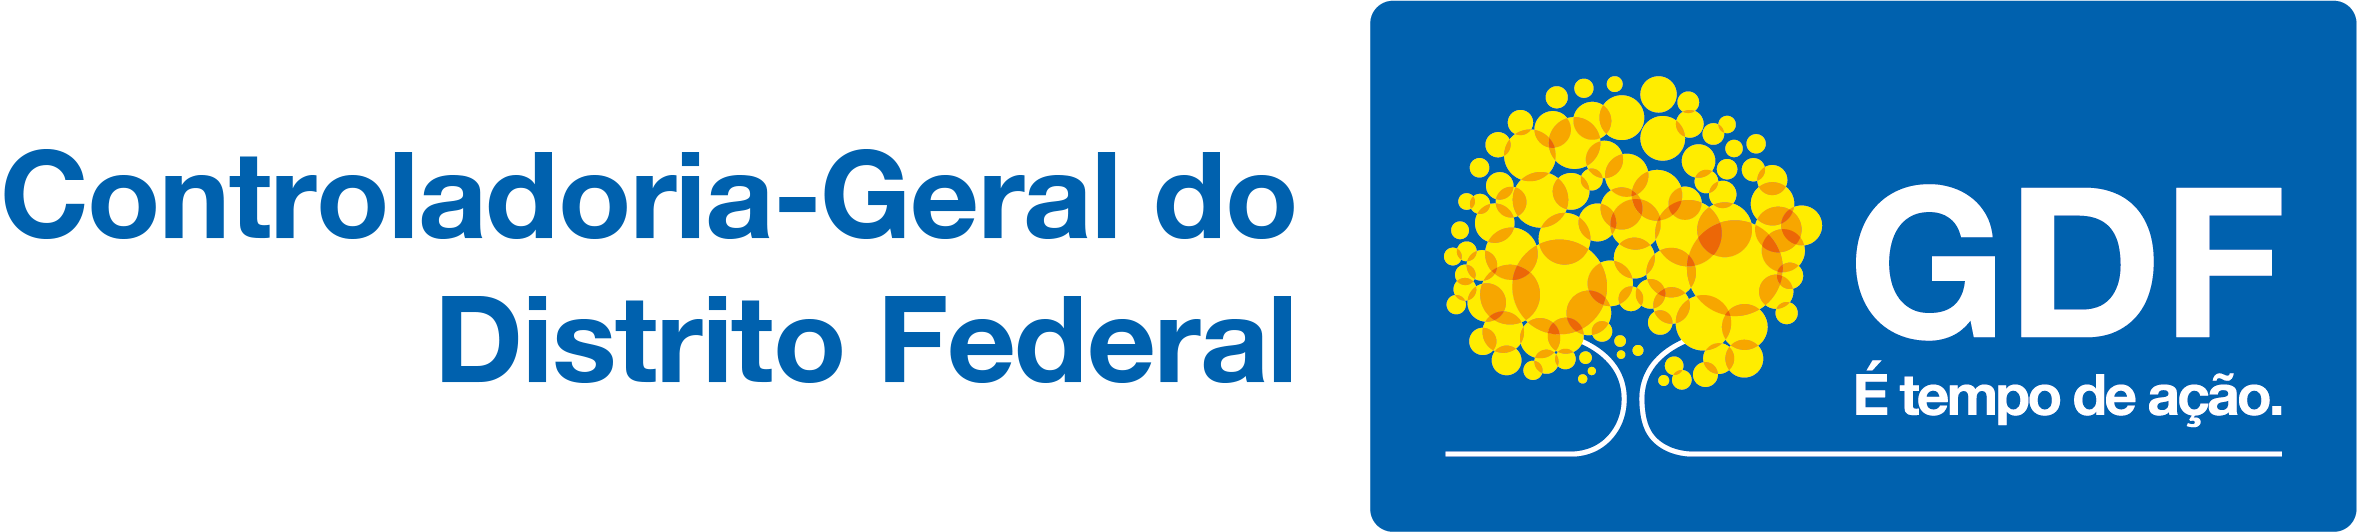 logo CGDF horizontal